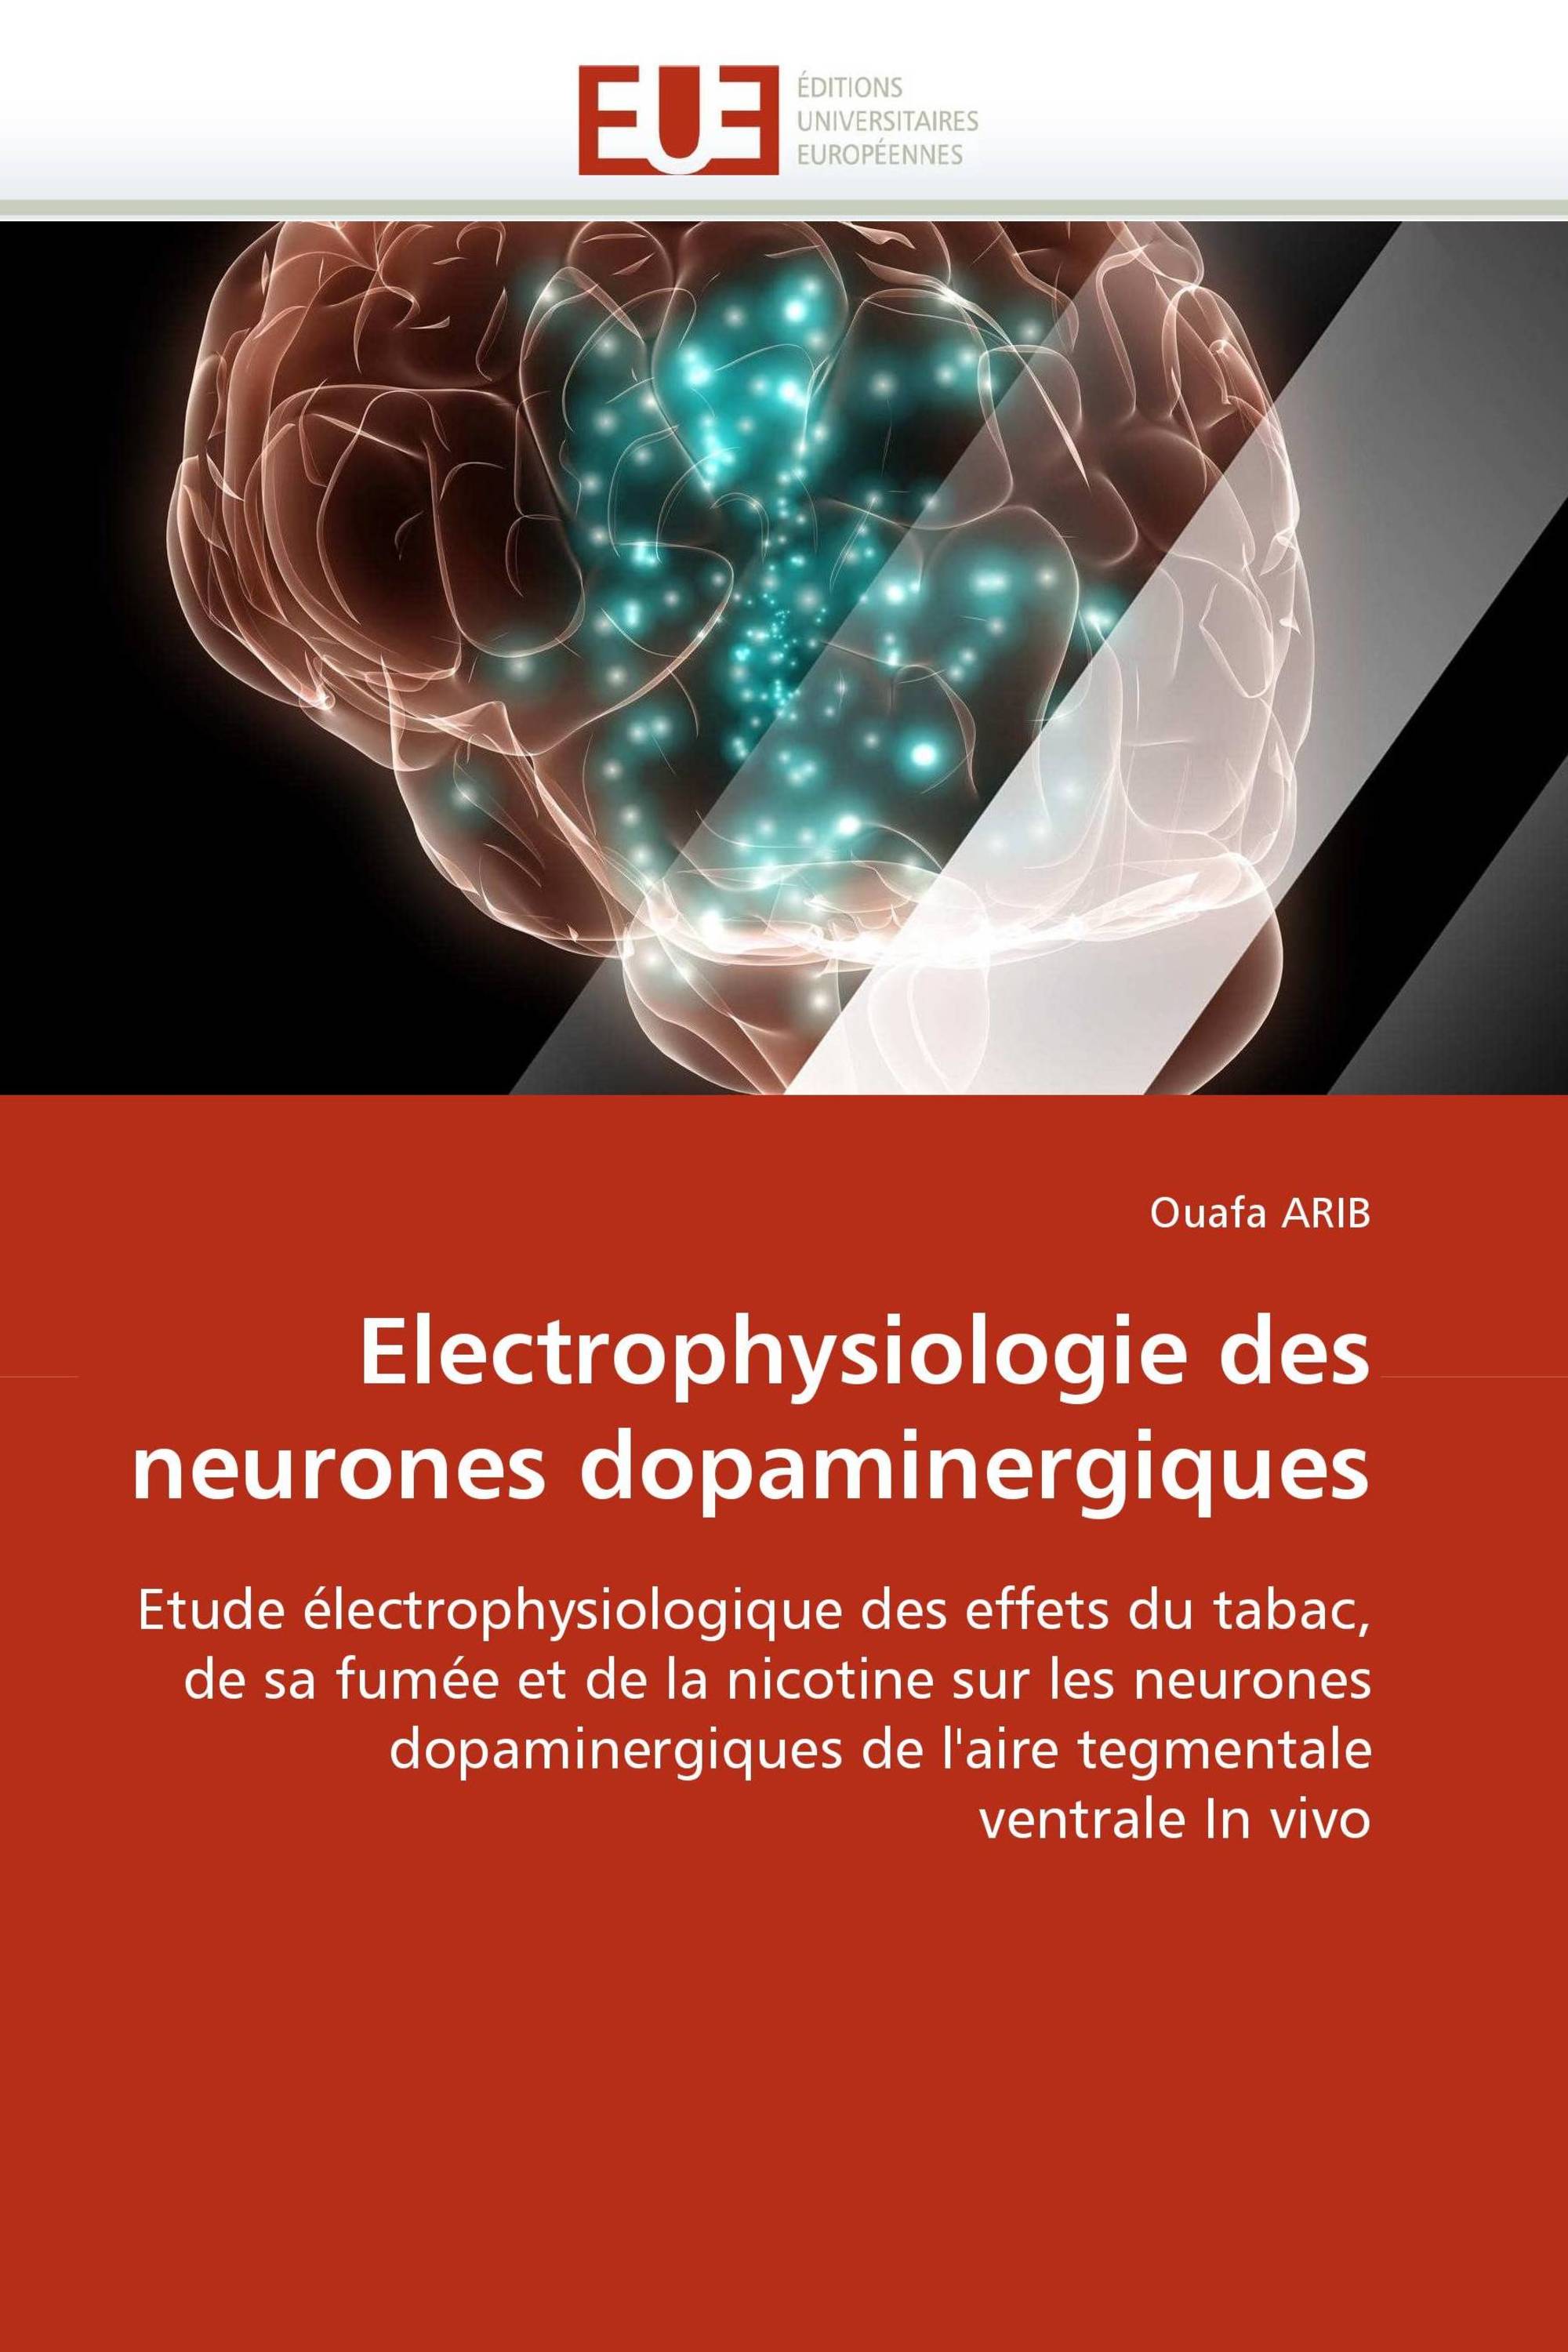 Electrophysiologie des neurones dopaminergiques